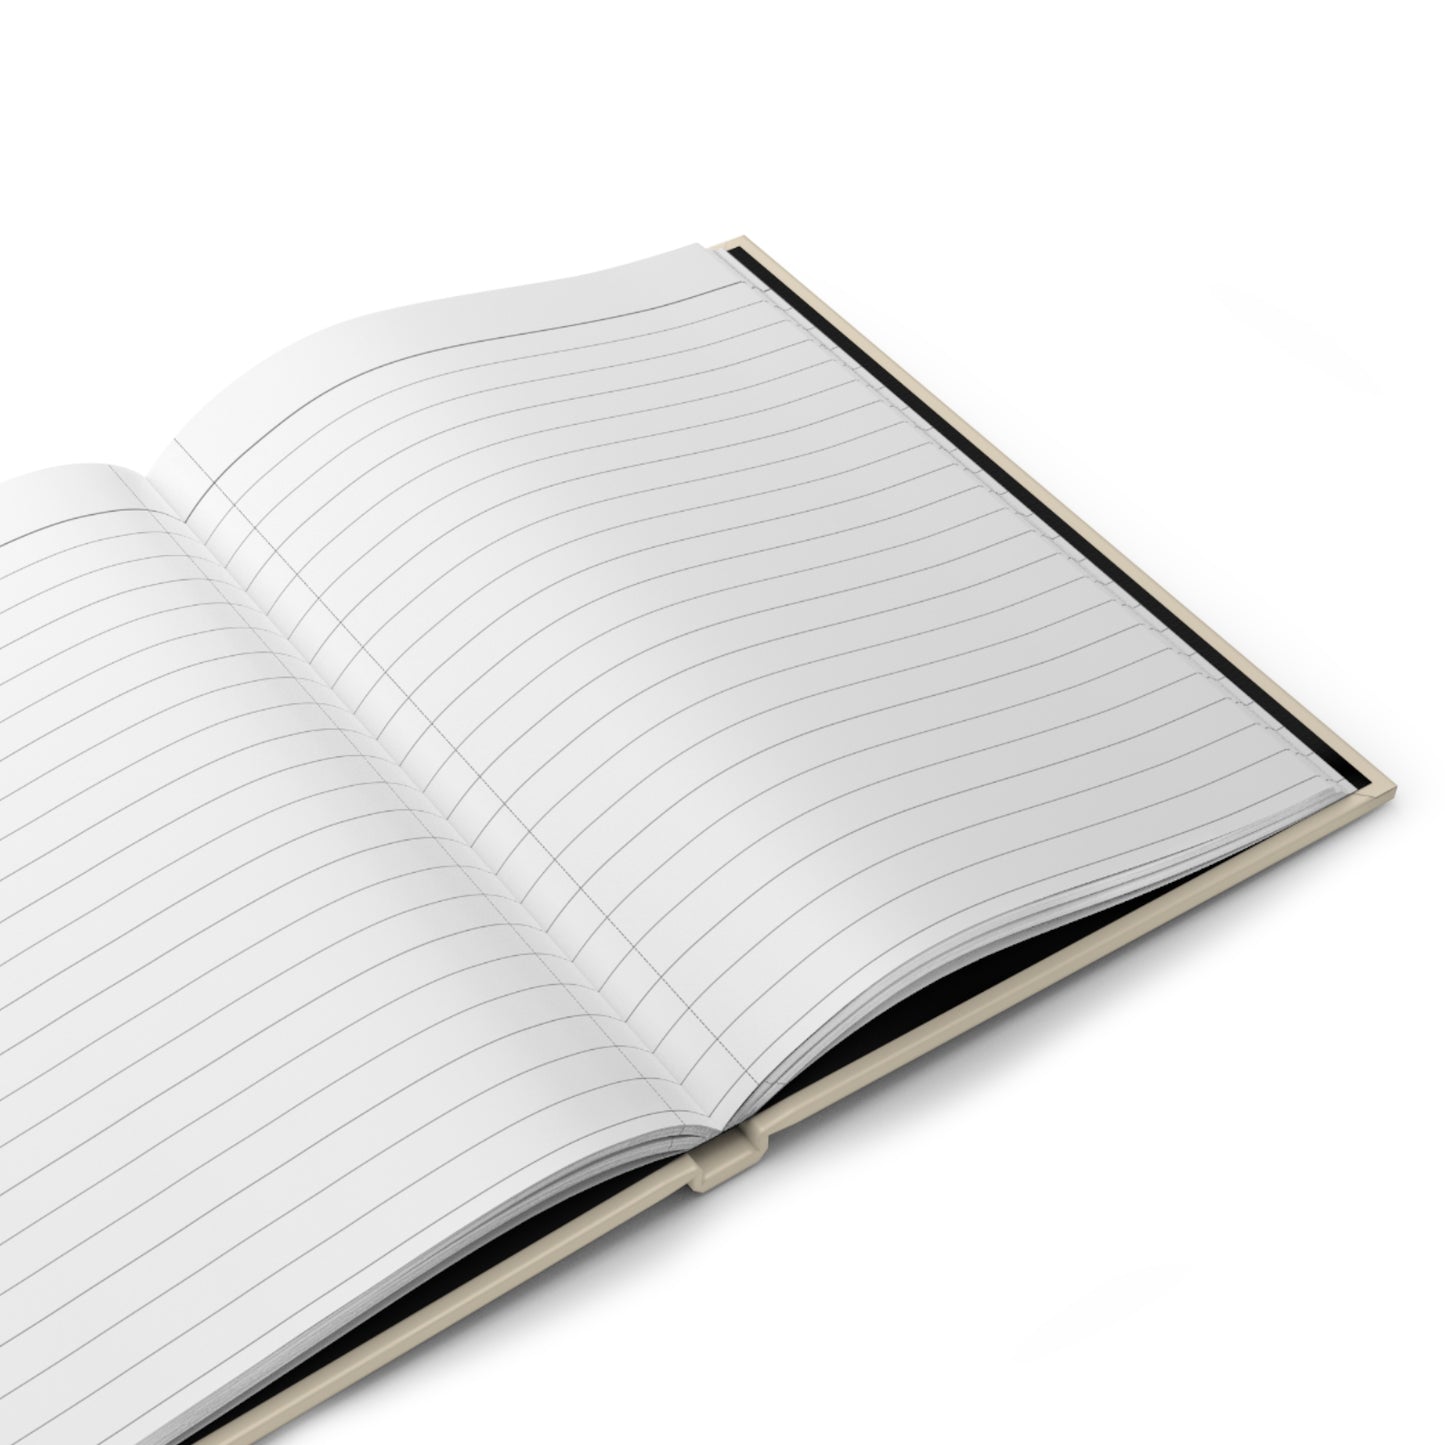 Strength Tarot Hardcover Notebook | Tarot journal